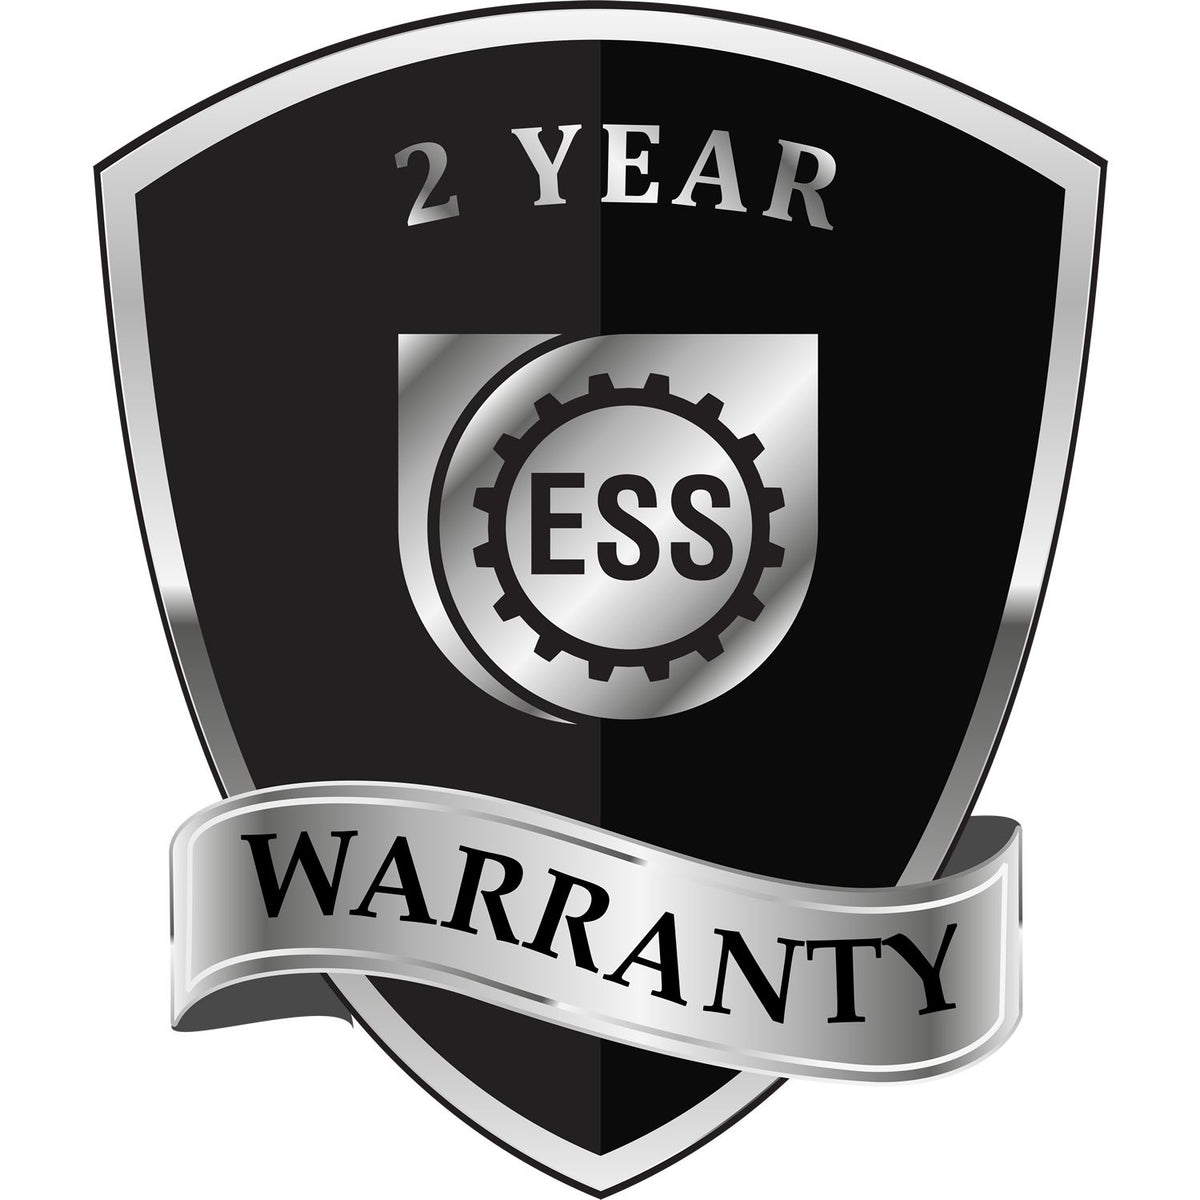 A black and silver badge or emblem showing warranty information for the Hybrid South Carolina Landscape Architect Seal